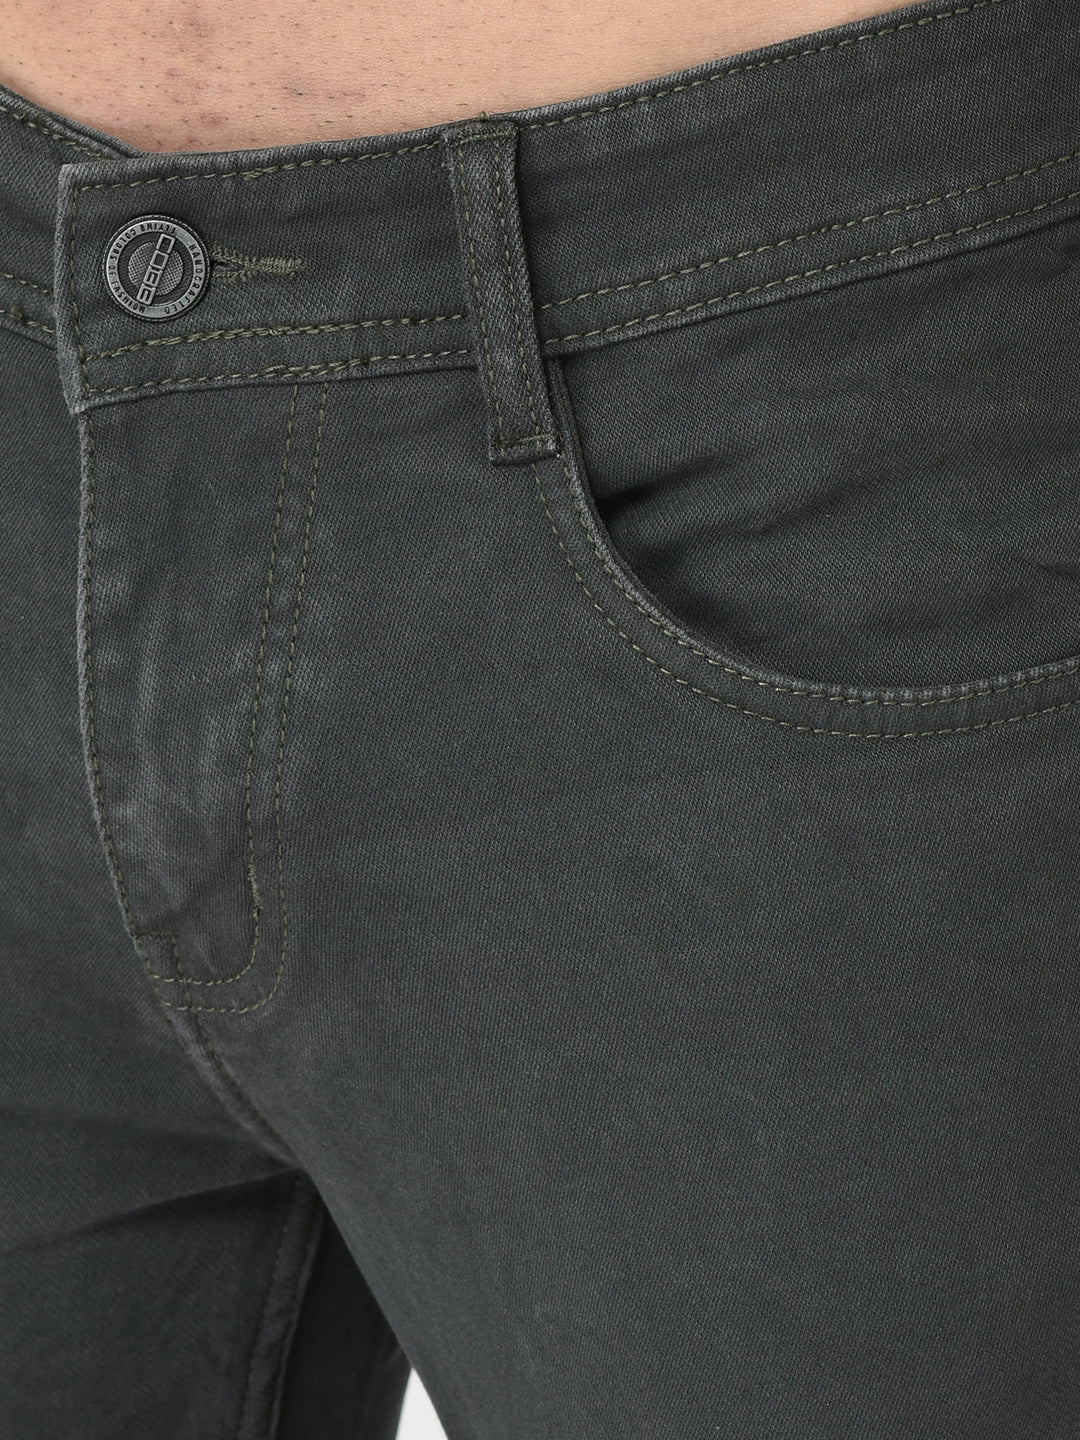 Cobb Dark Olive Ultra Fit Jeans